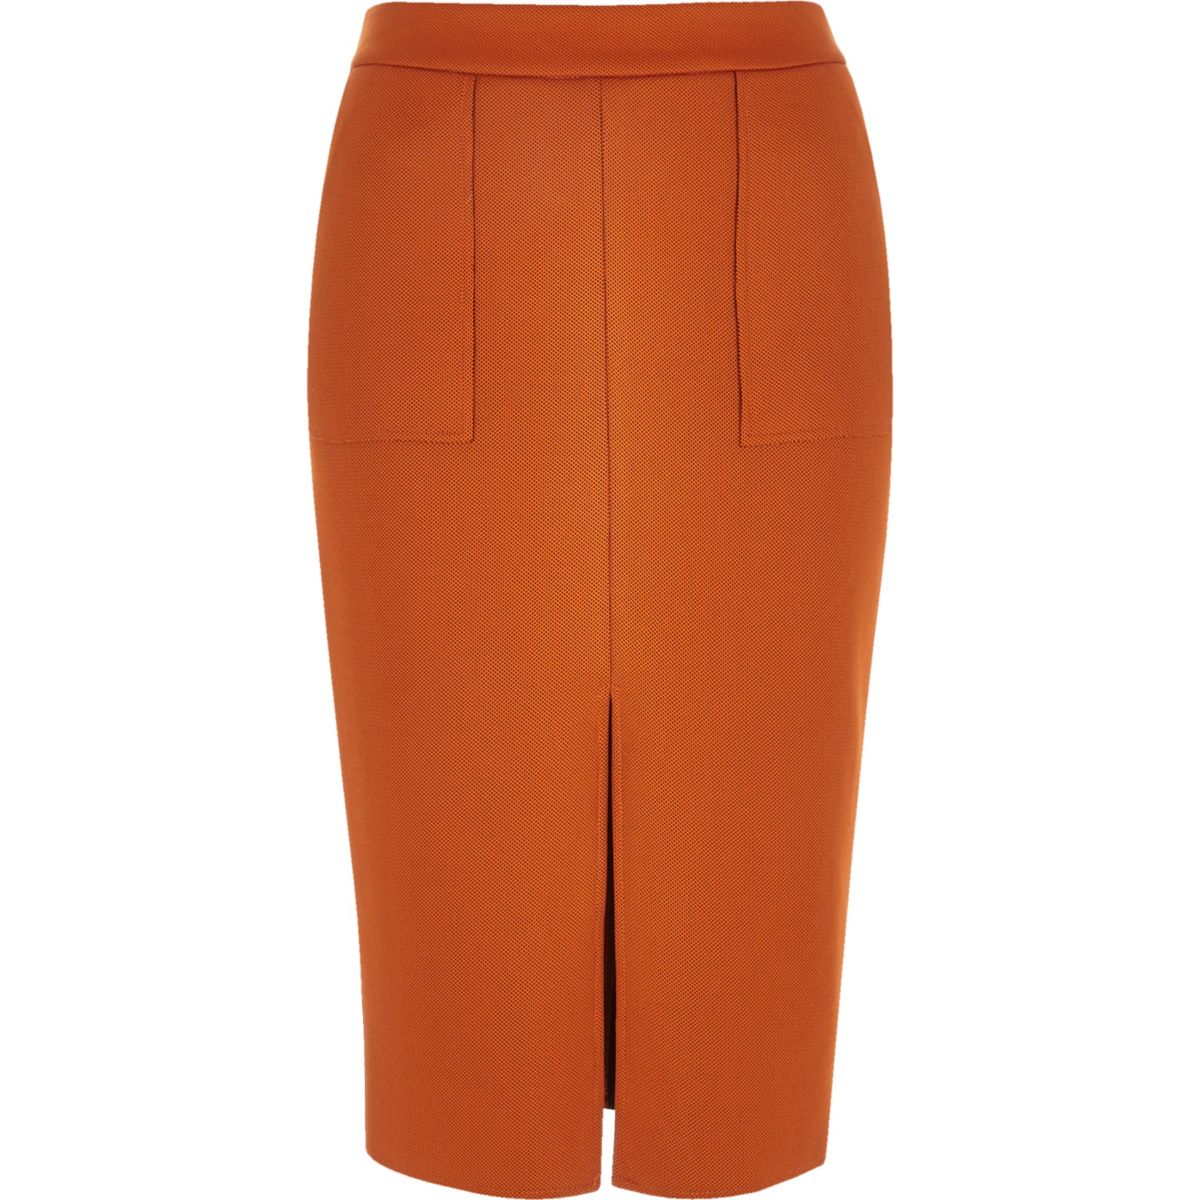 Deep orange split front pencil skirt - Skirts - Sale - women